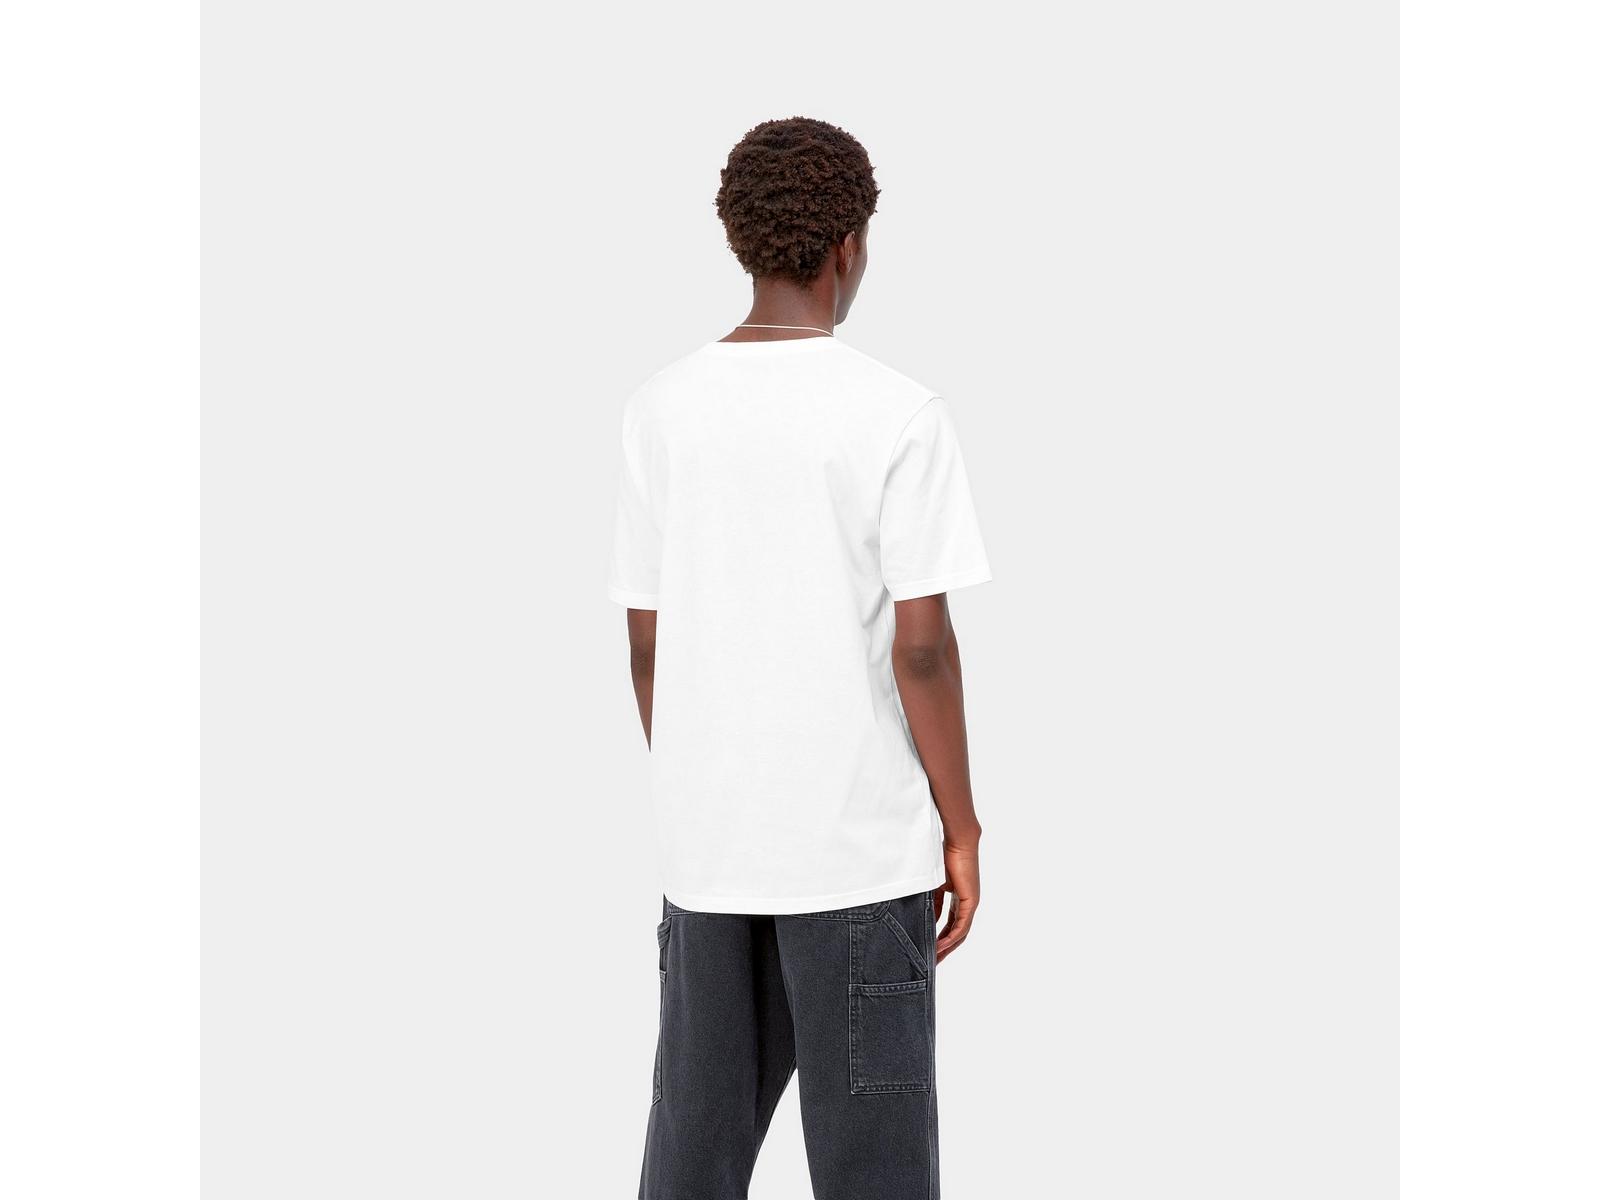 CARHARTT WIP Camiseta S/S Pocket White Blanco